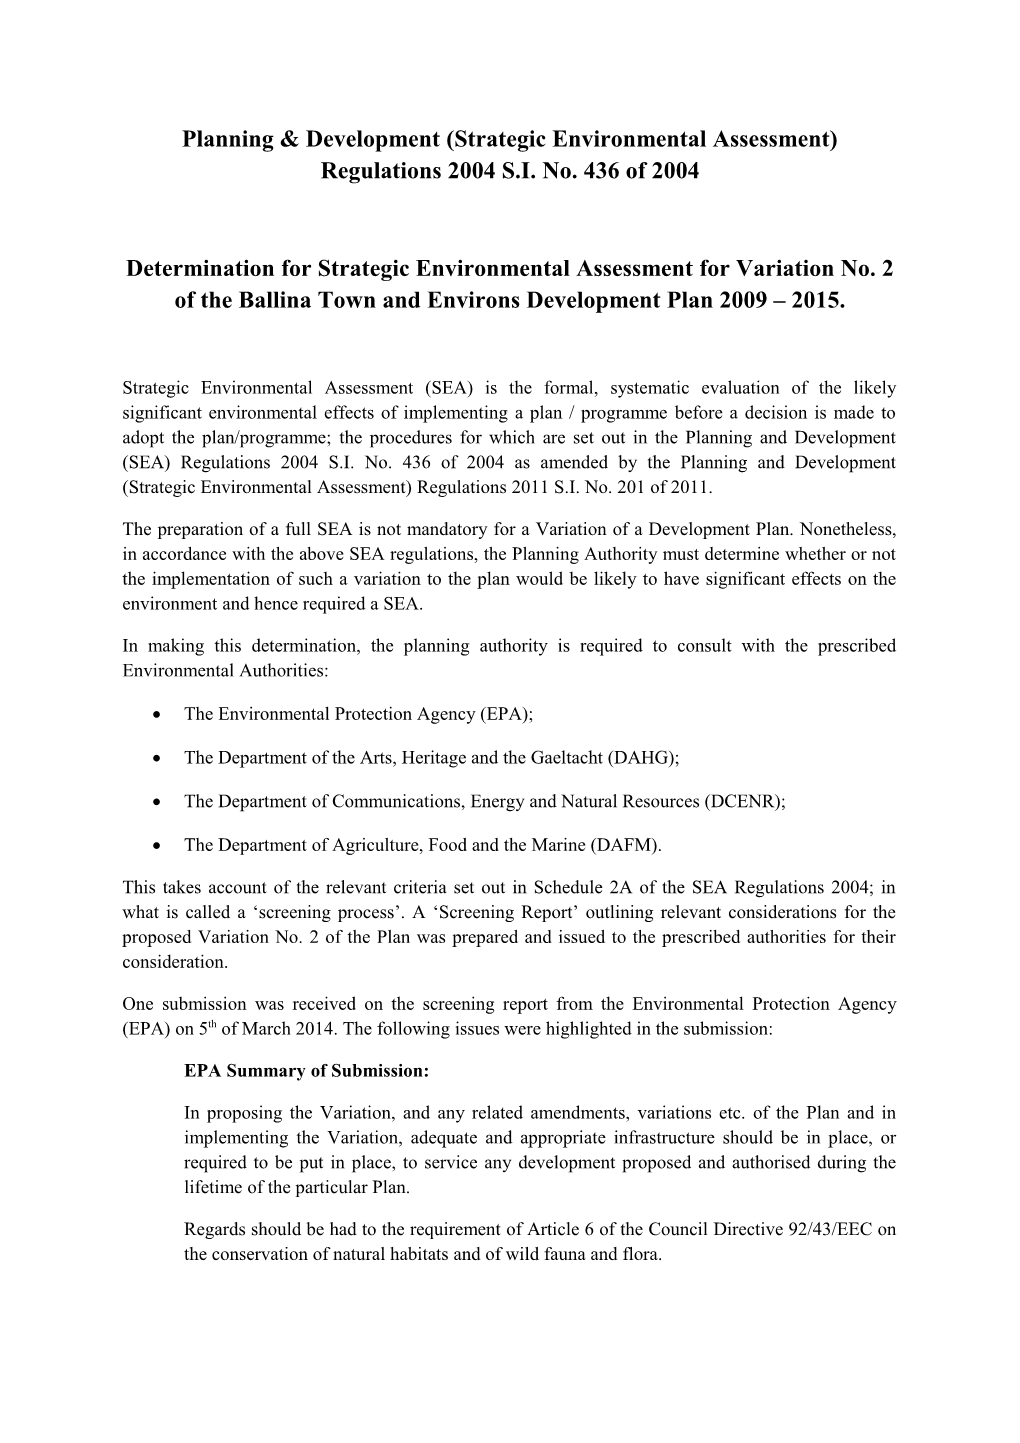 Planning & Development (Strategic Environmental Assessment) Regulations 2004 S